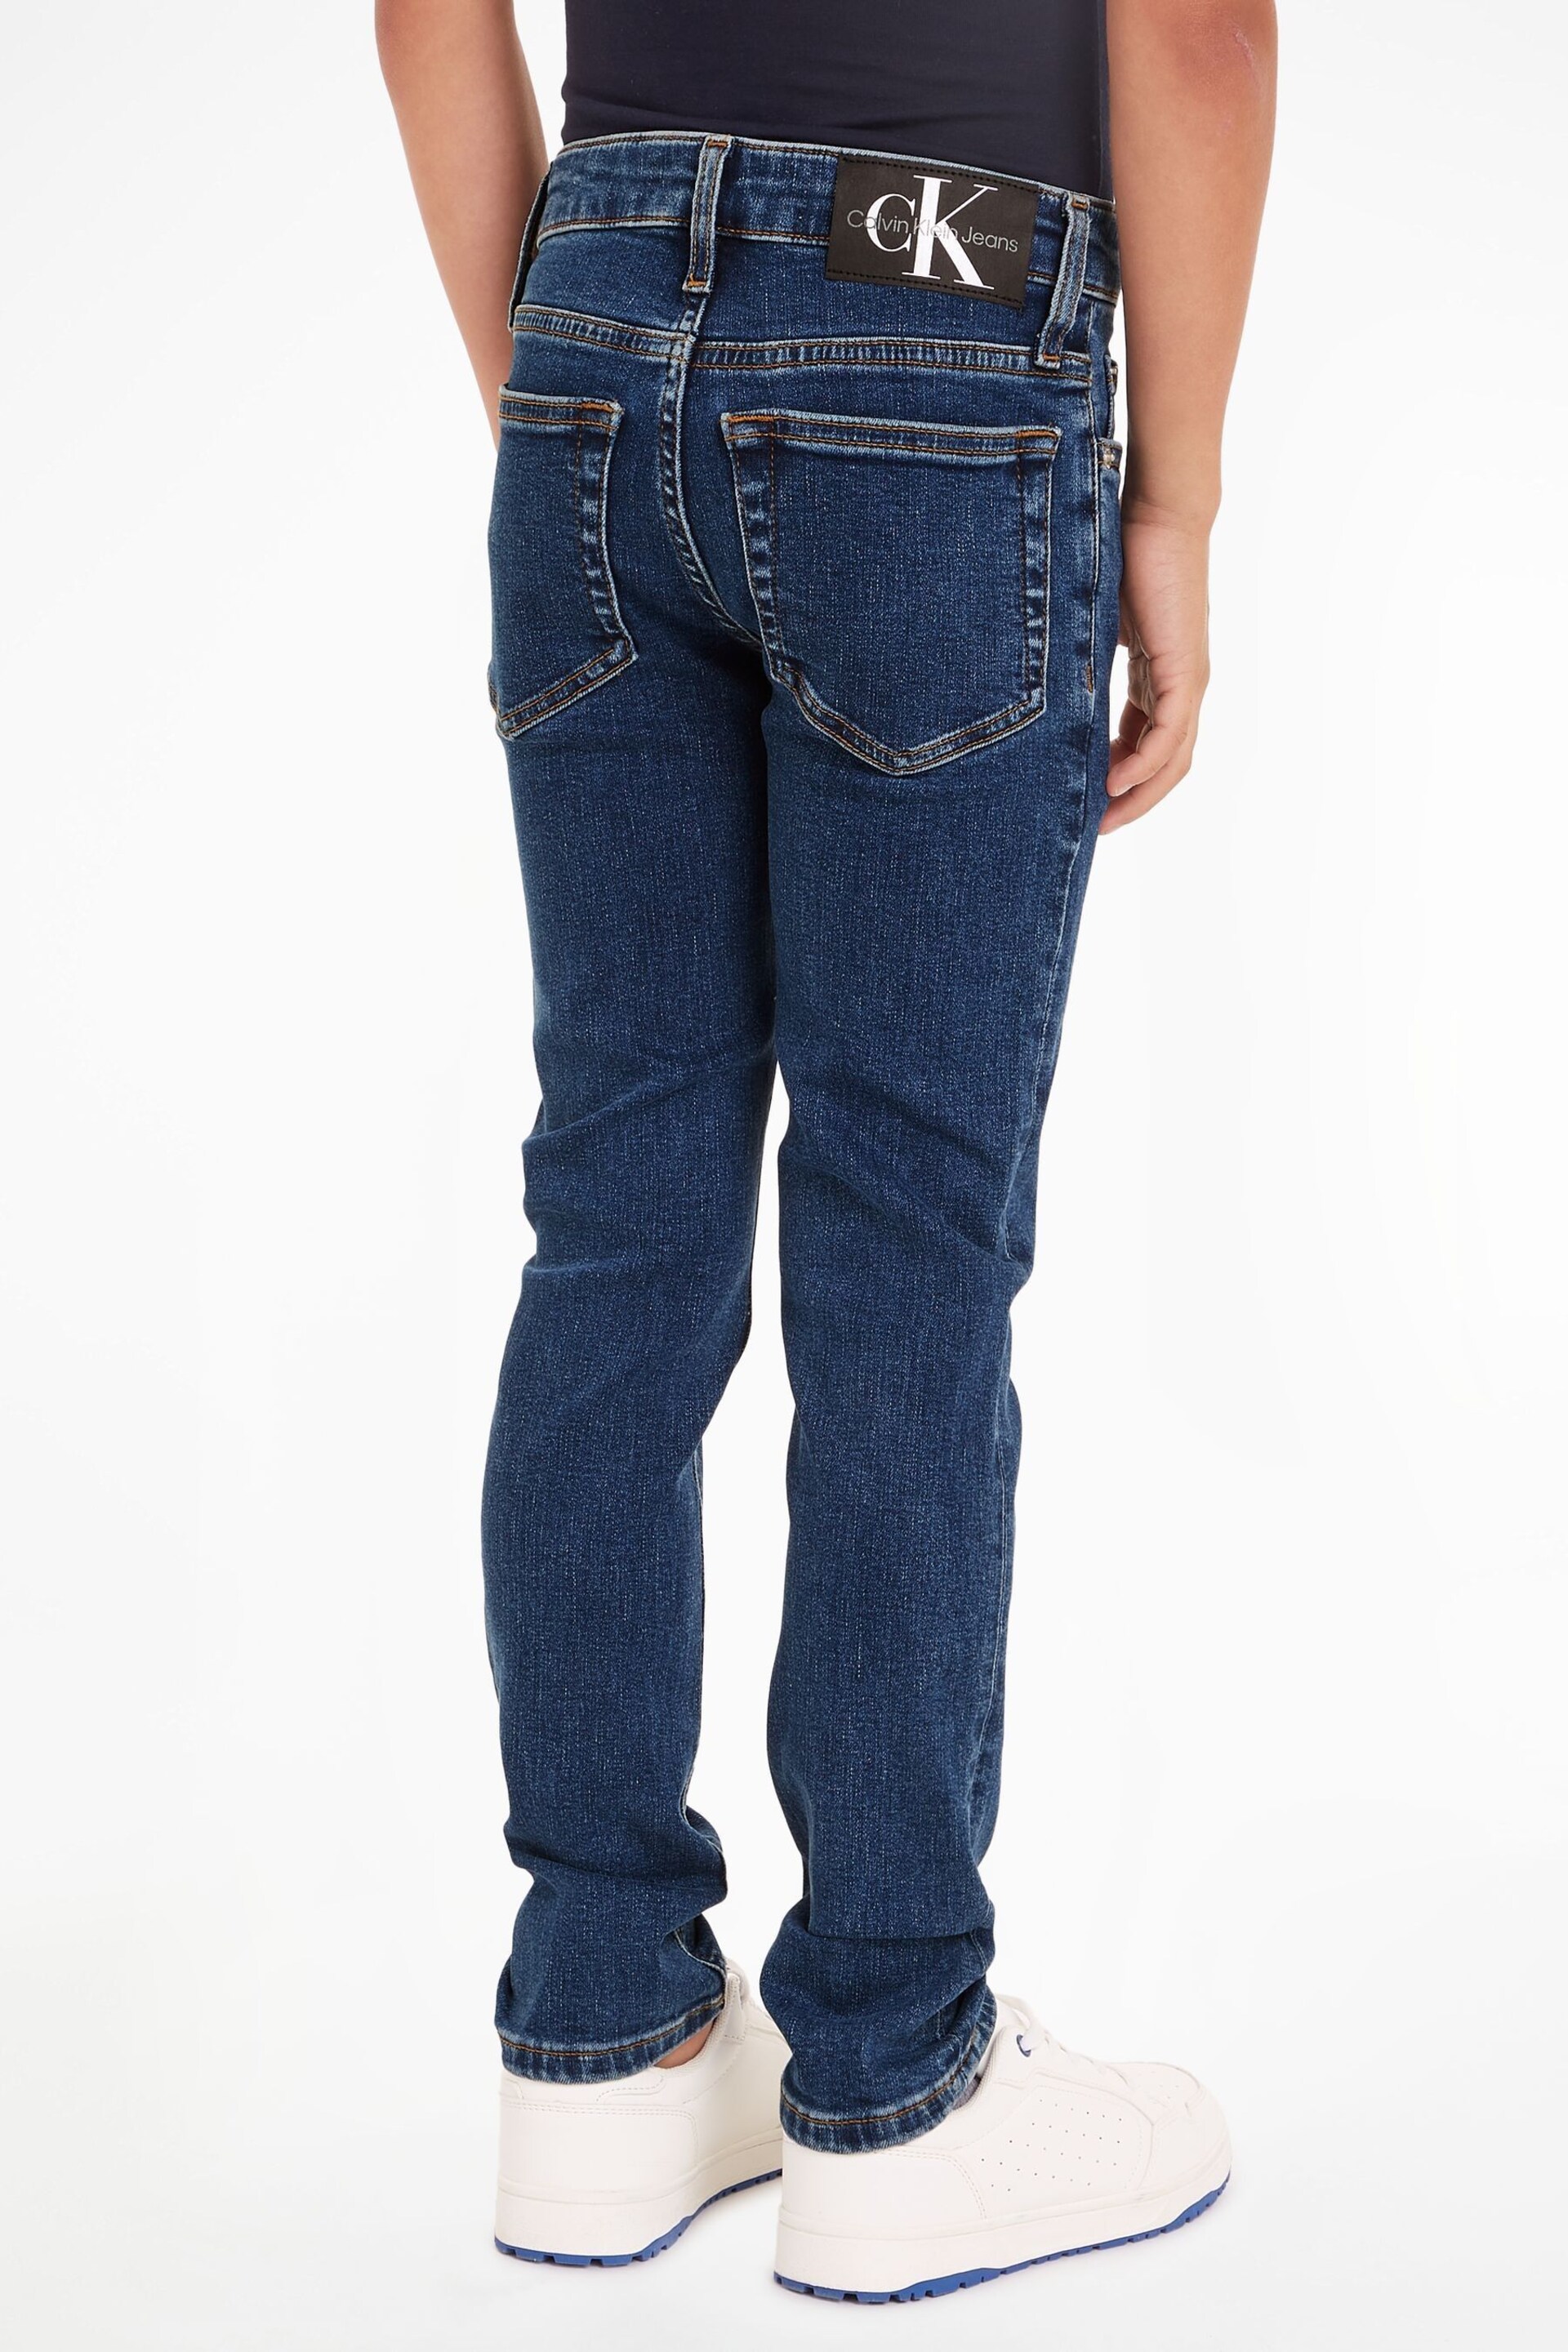 Calvin Klein Jeans Slim Blue Denim Jeans - Image 3 of 5